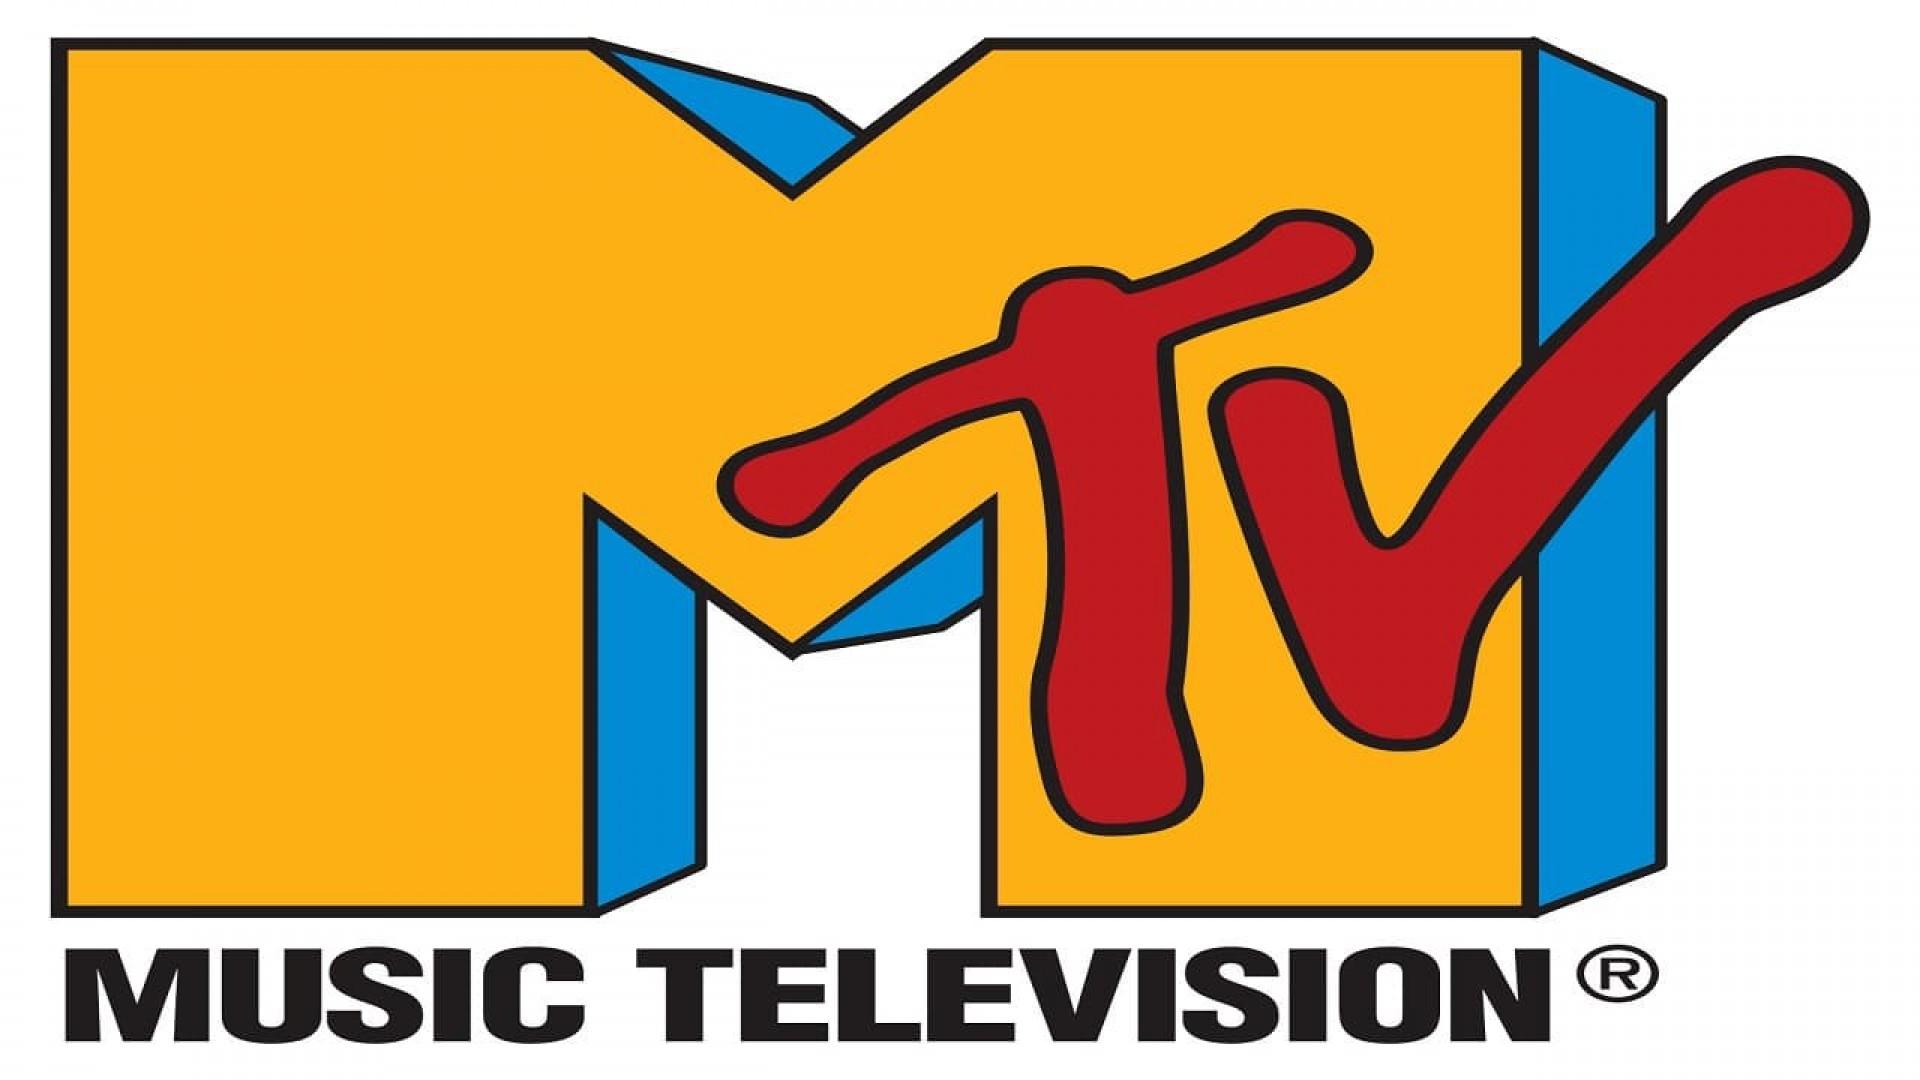 Metallica: MTV Icon